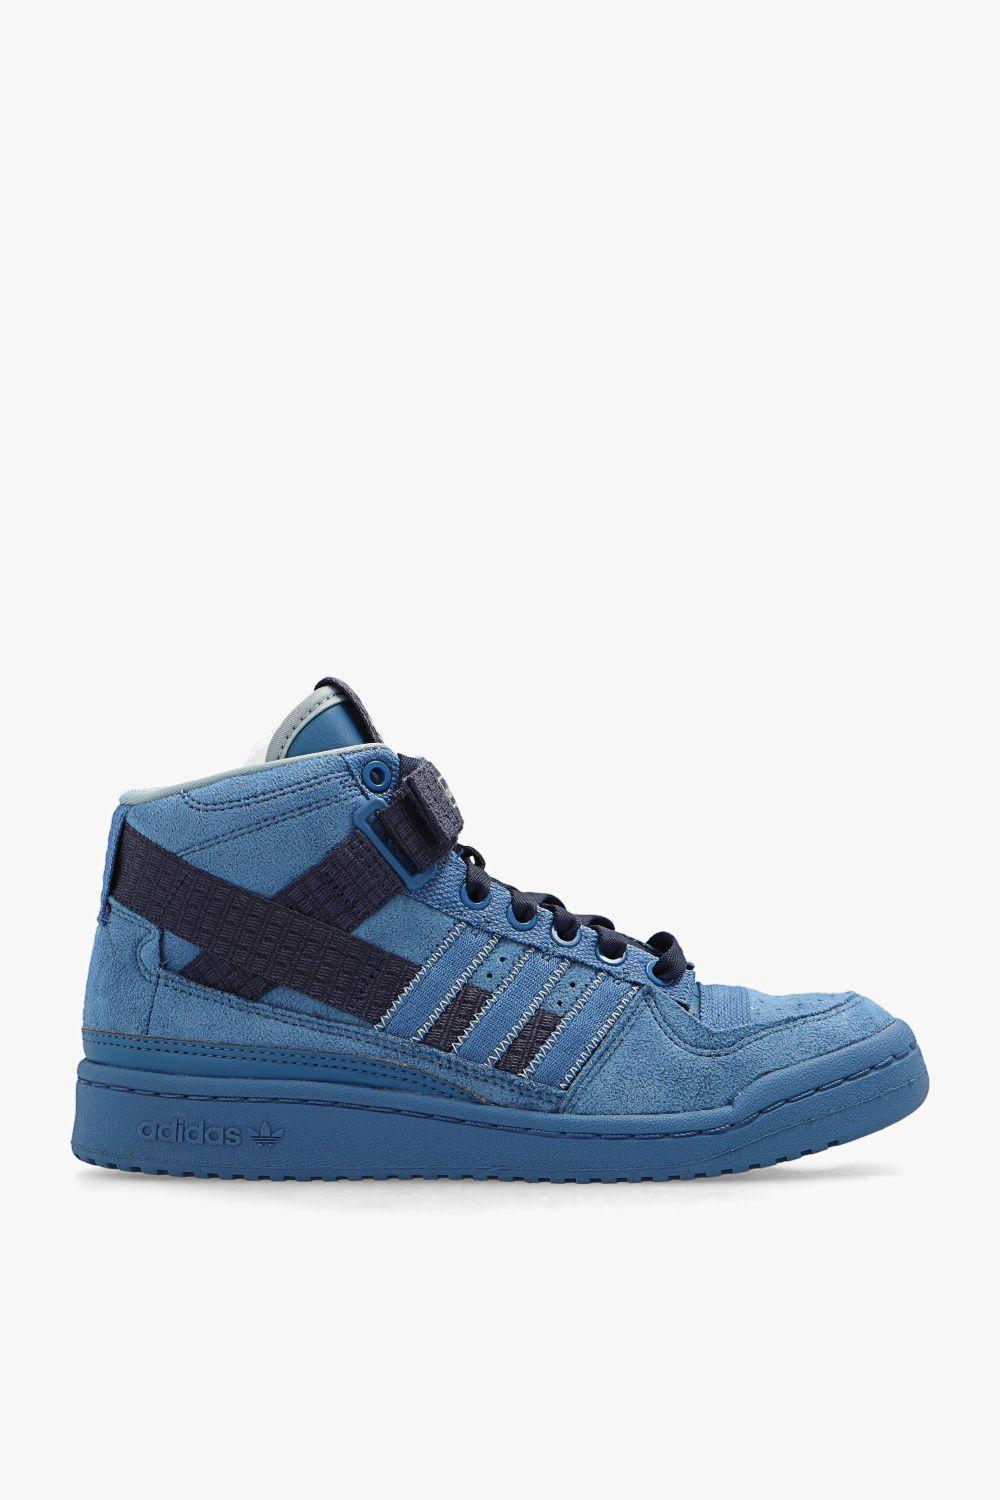 adidas Originals 'forum Mid Parley' Sneakers in Blue | Lyst